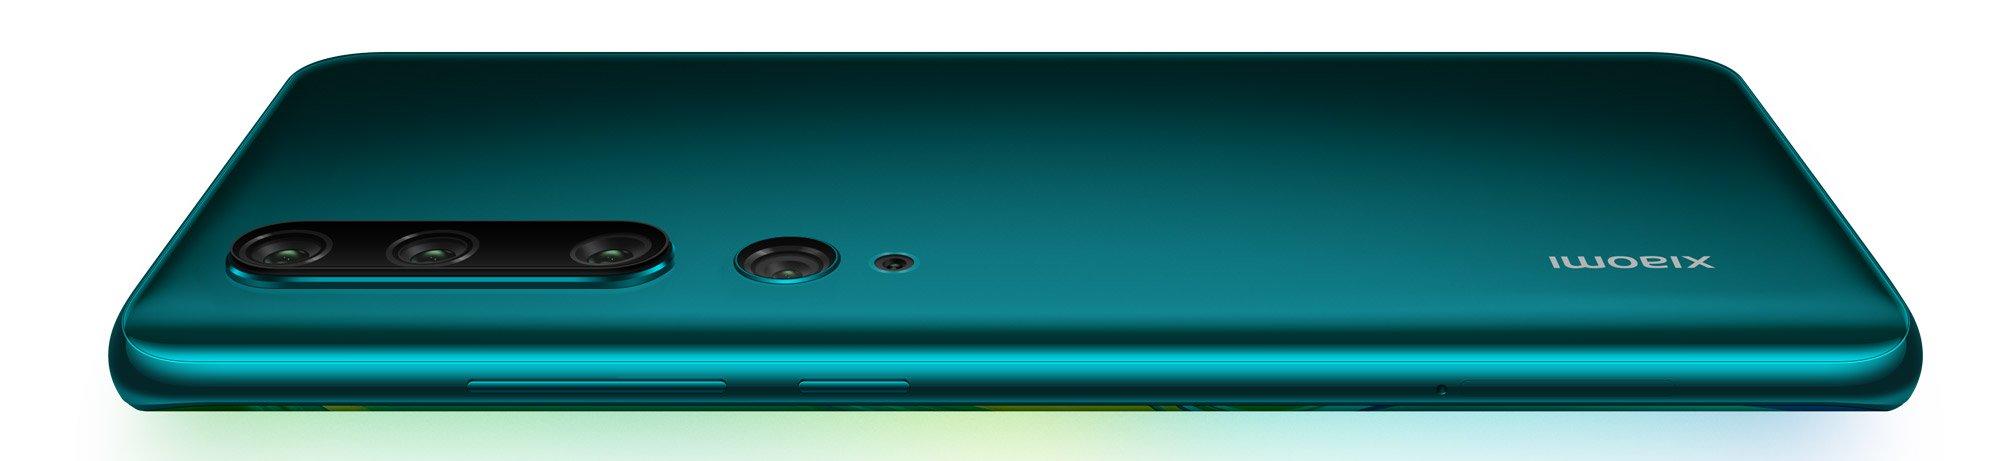 Смартфон Xiaomi Mi Note 10 6/128Gb Green заказать